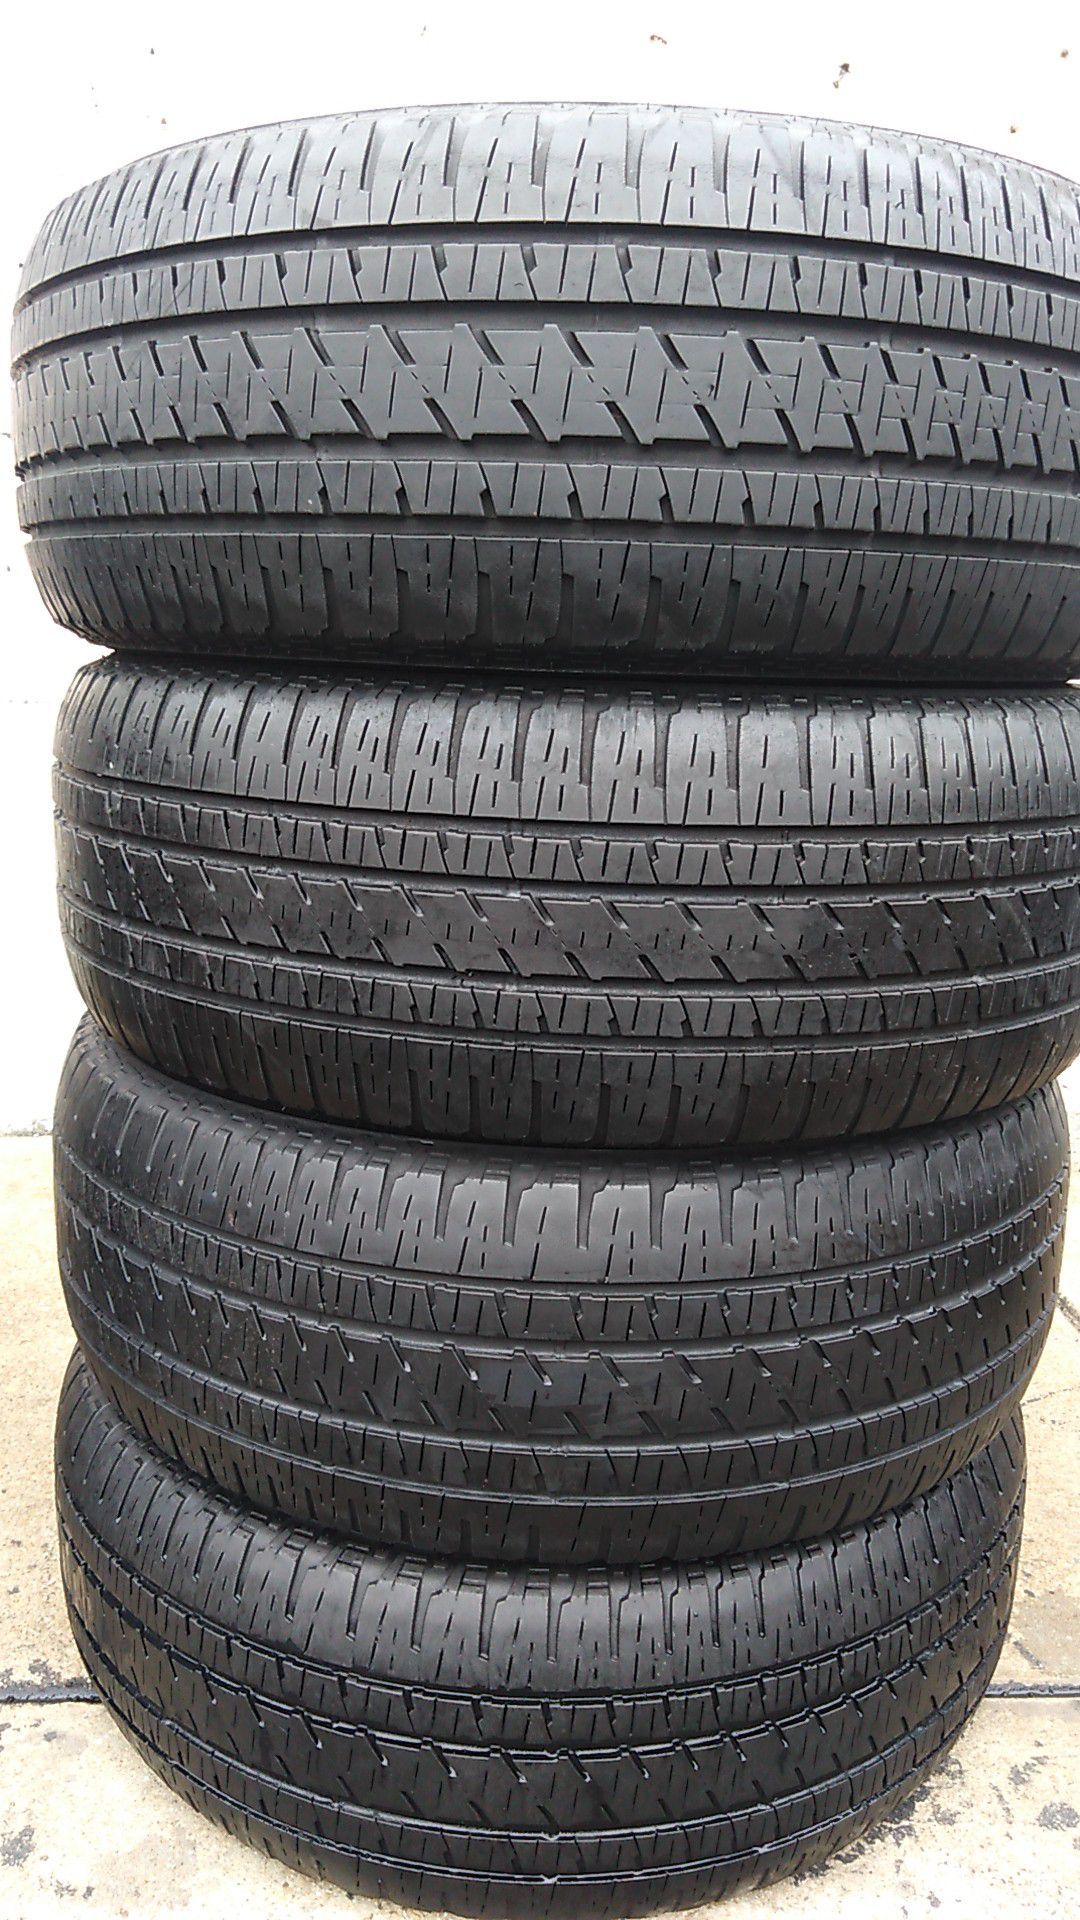 Four matching Bridgestone tires for sale 275/55/20